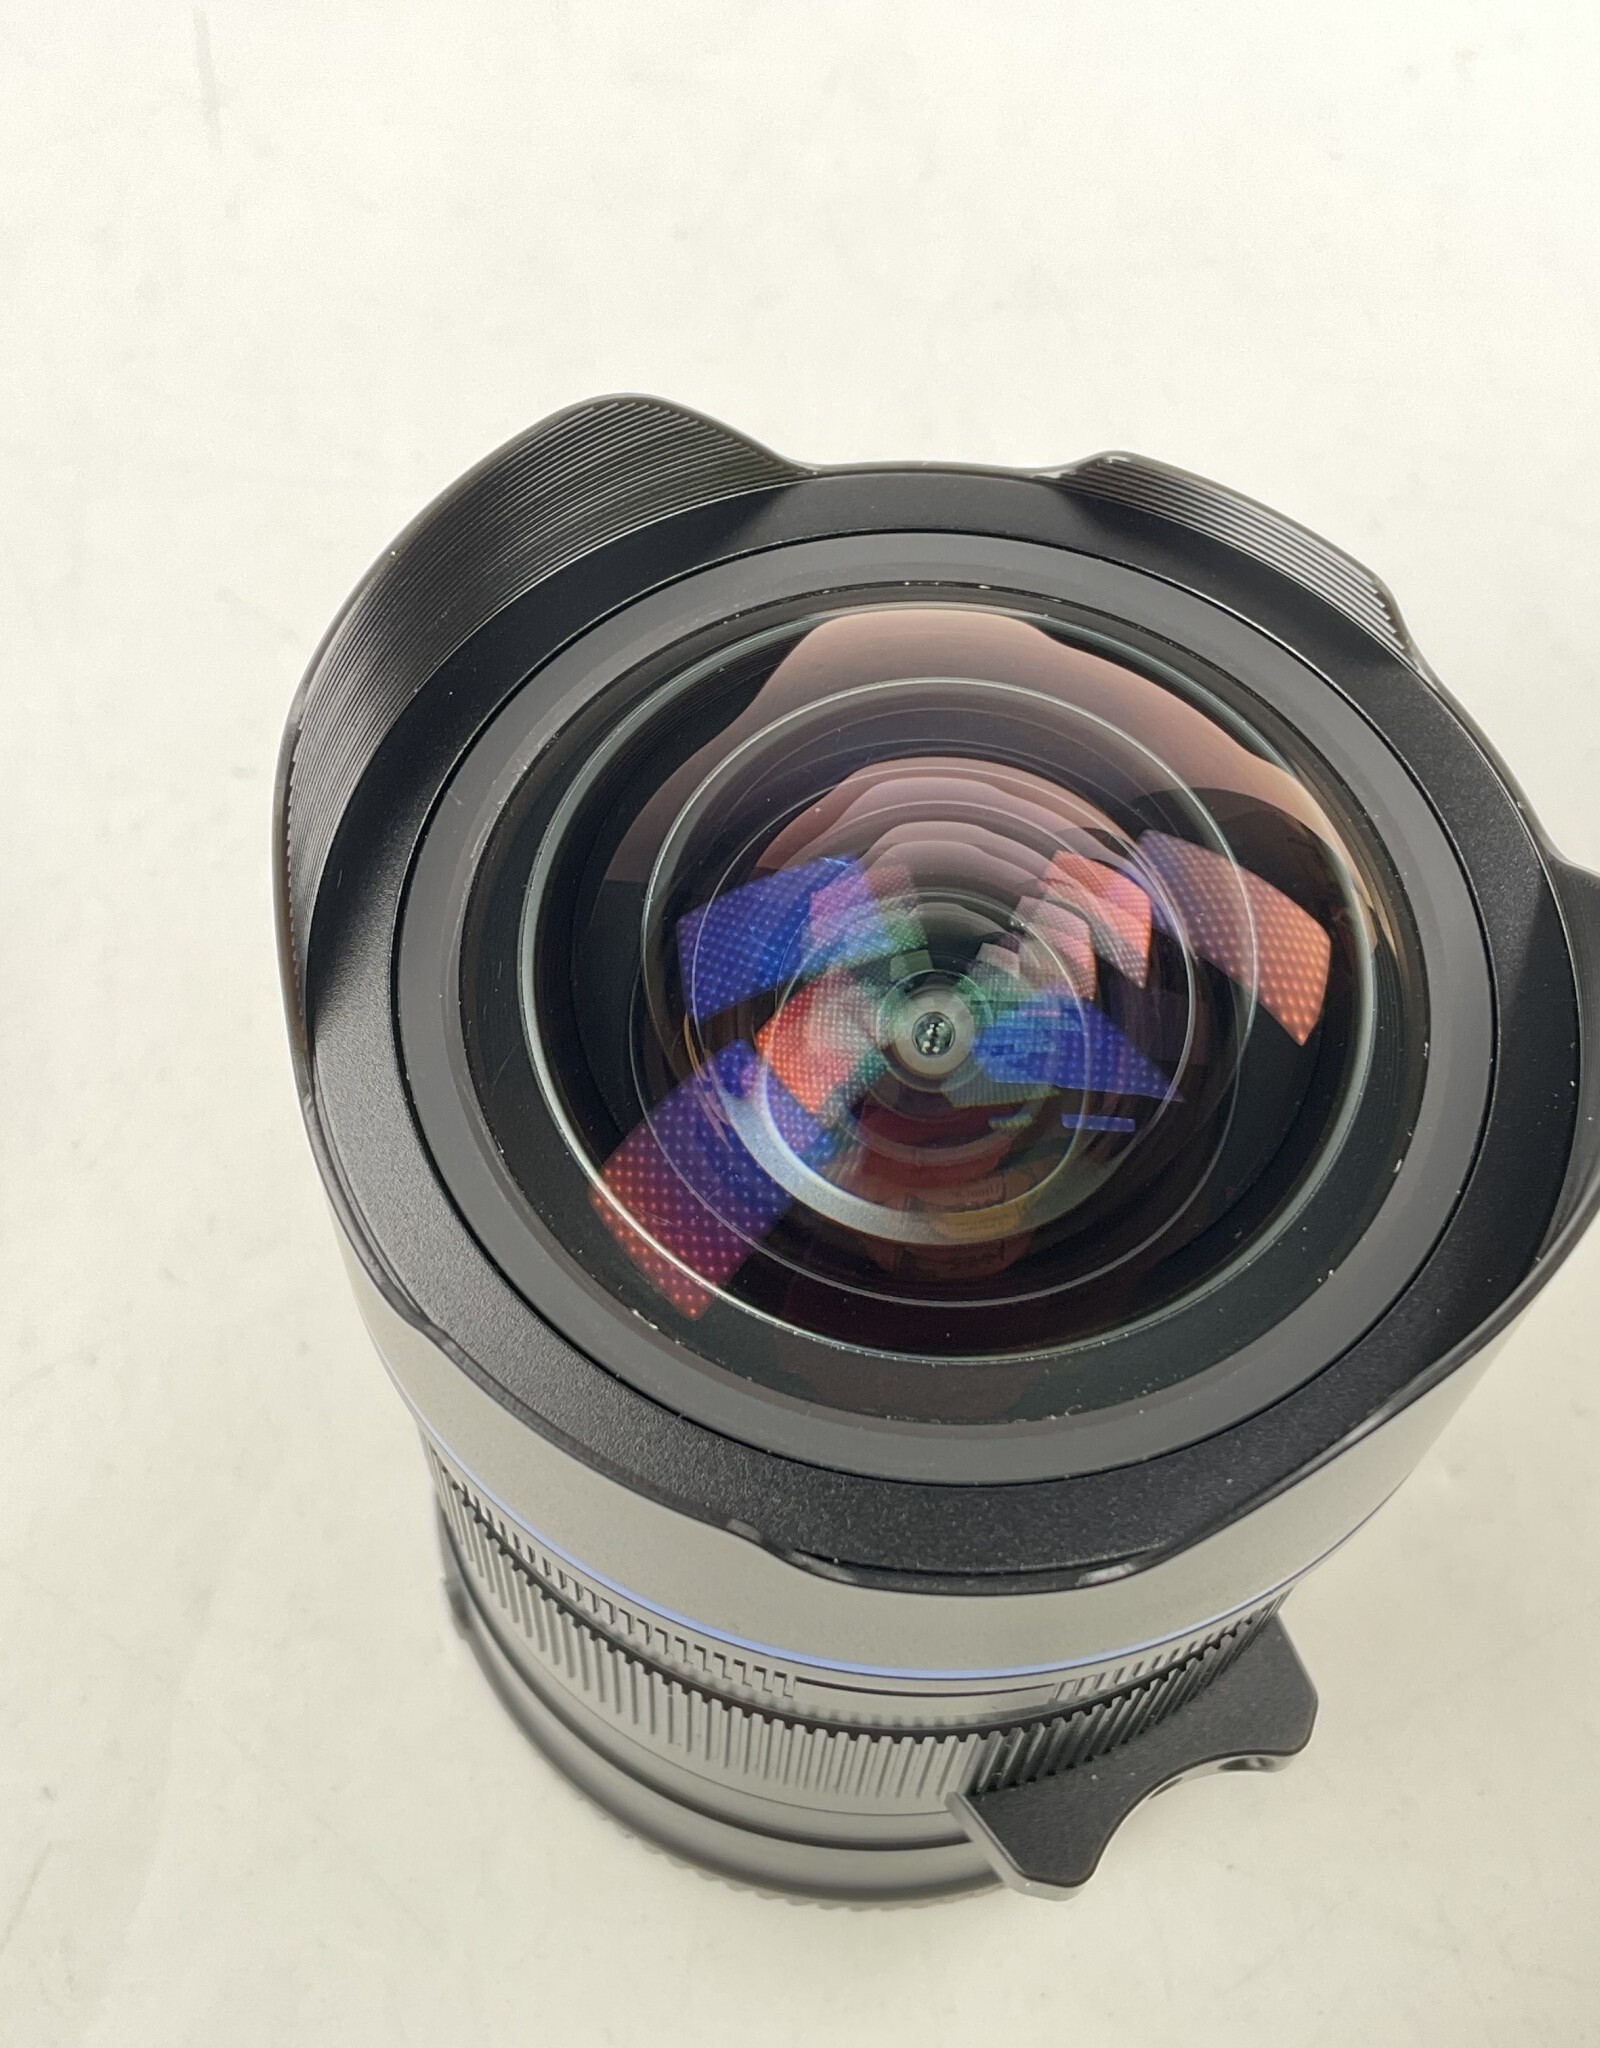 Laowa FF II 9mm f5.6 W-Dreamer Lens for Sony Used Good